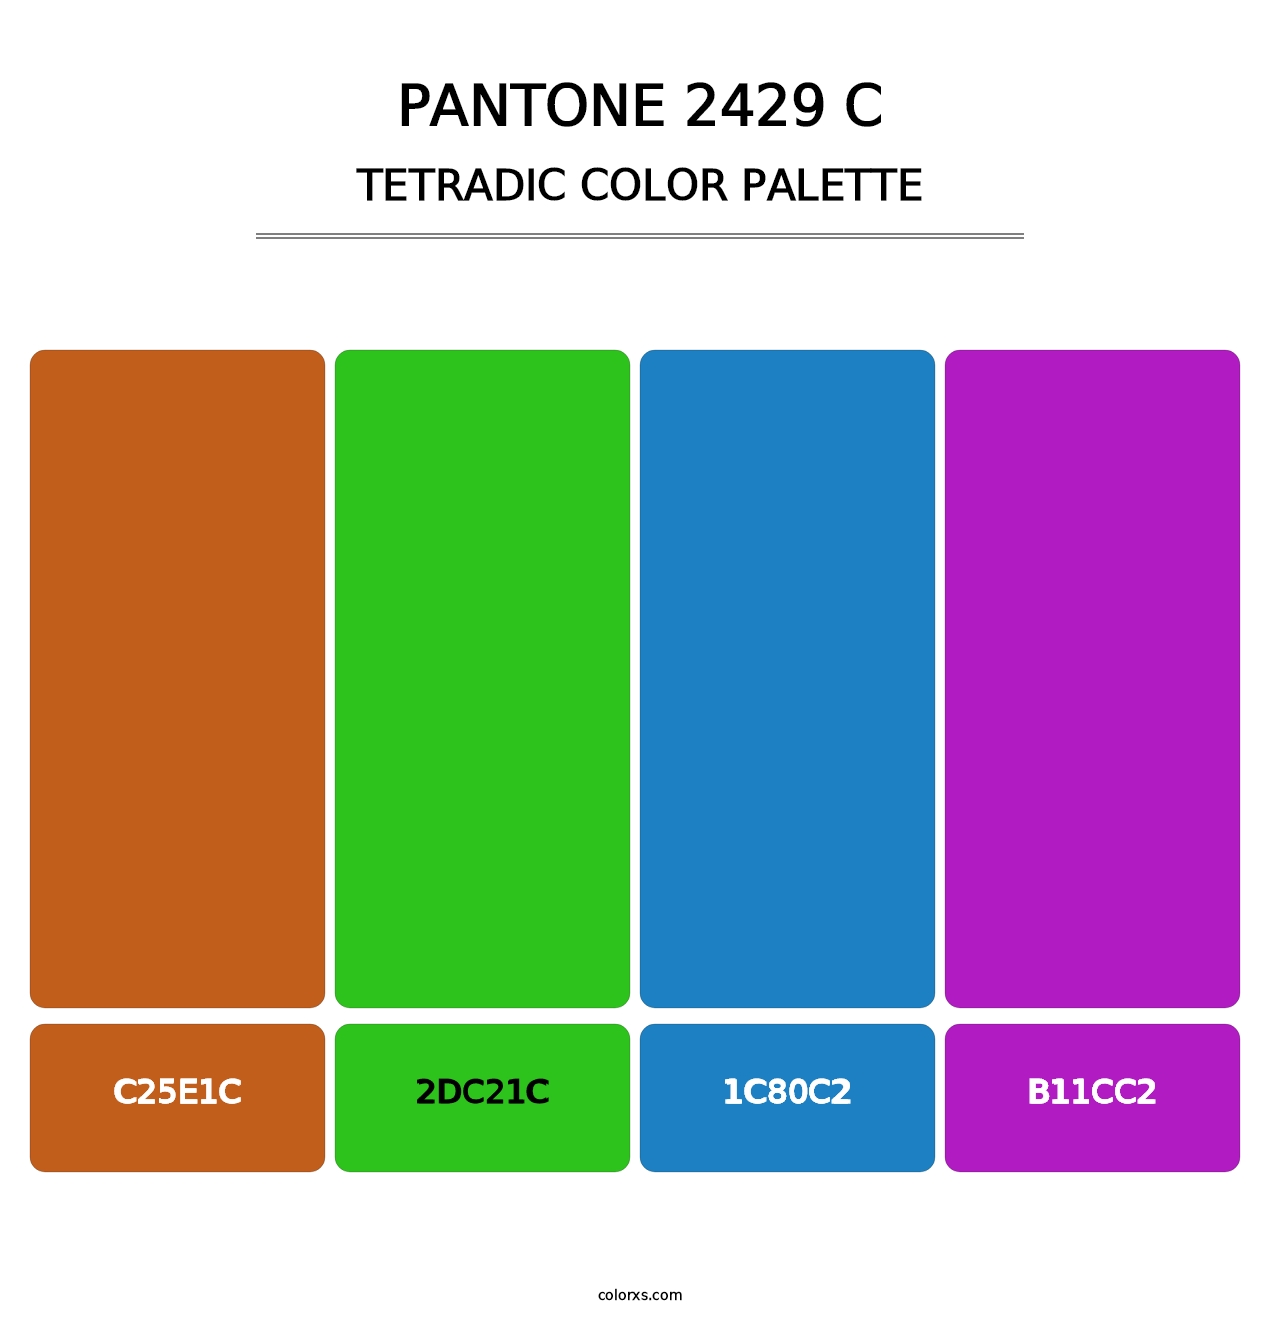 PANTONE 2429 C - Tetradic Color Palette